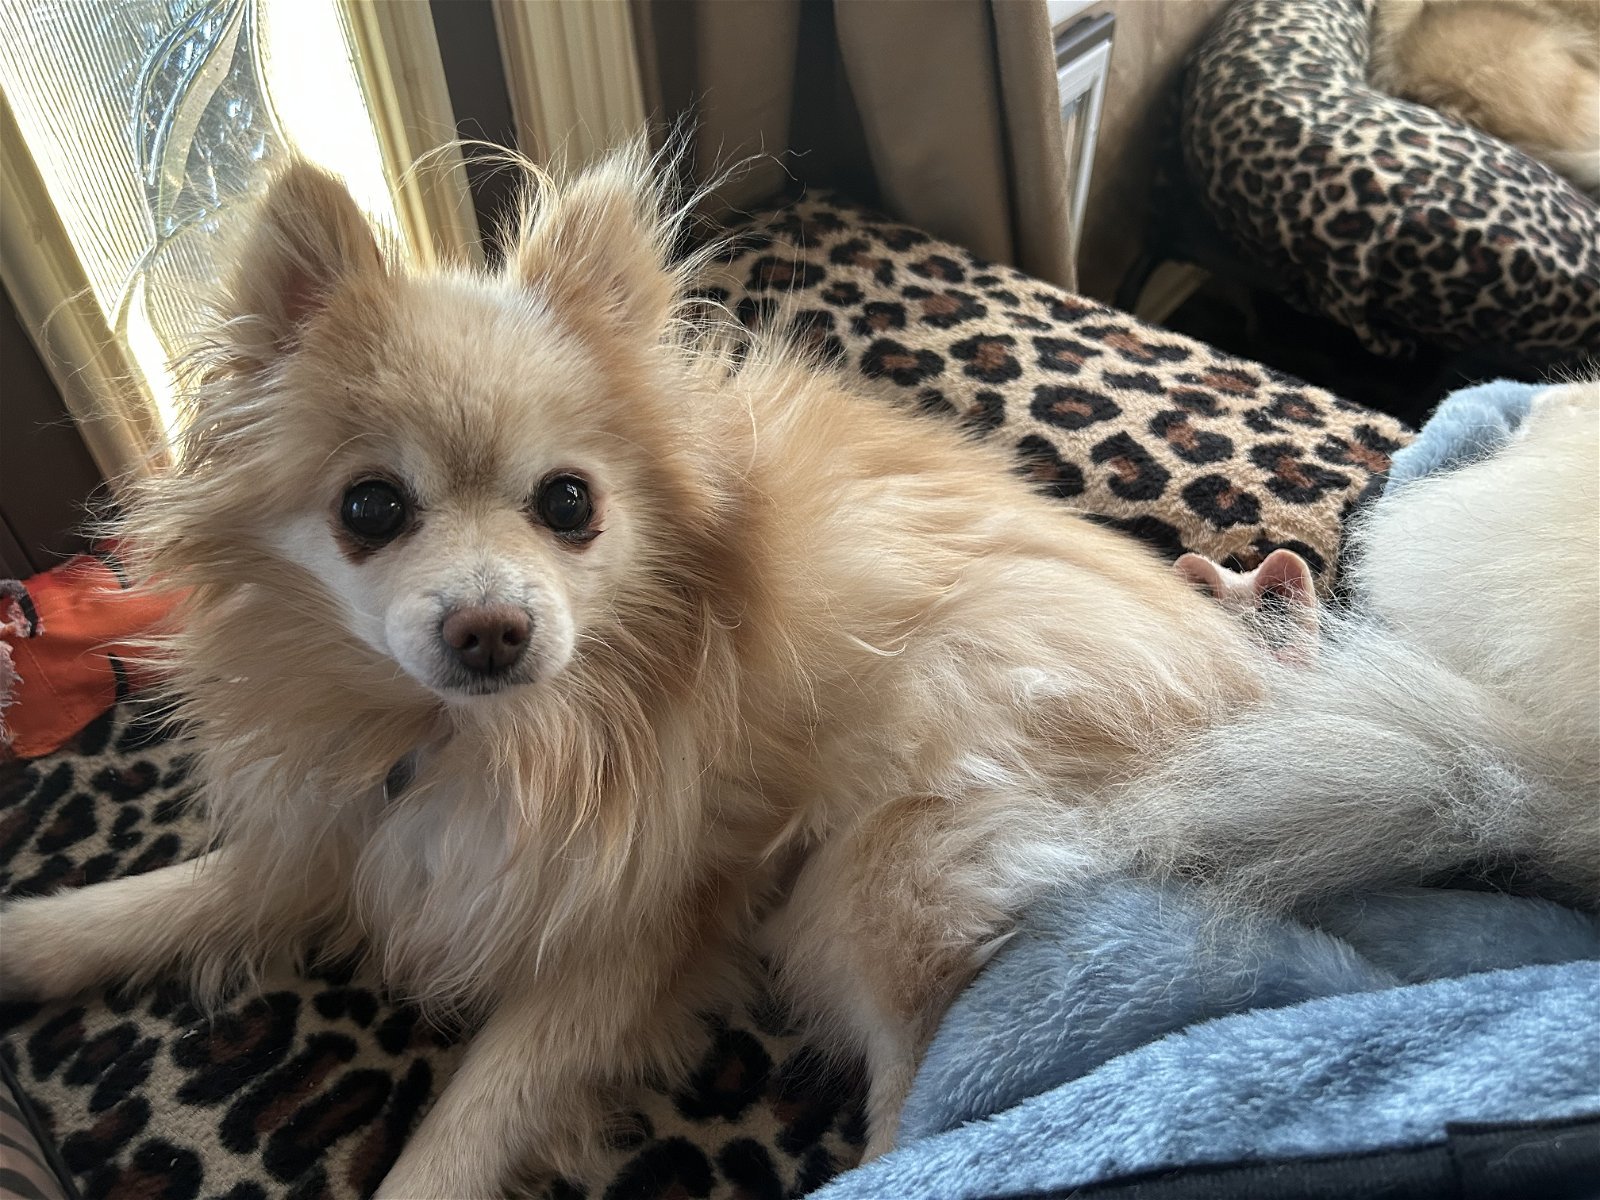 Keeper, an adoptable Pomeranian in Garland, TX, 75040 | Photo Image 1